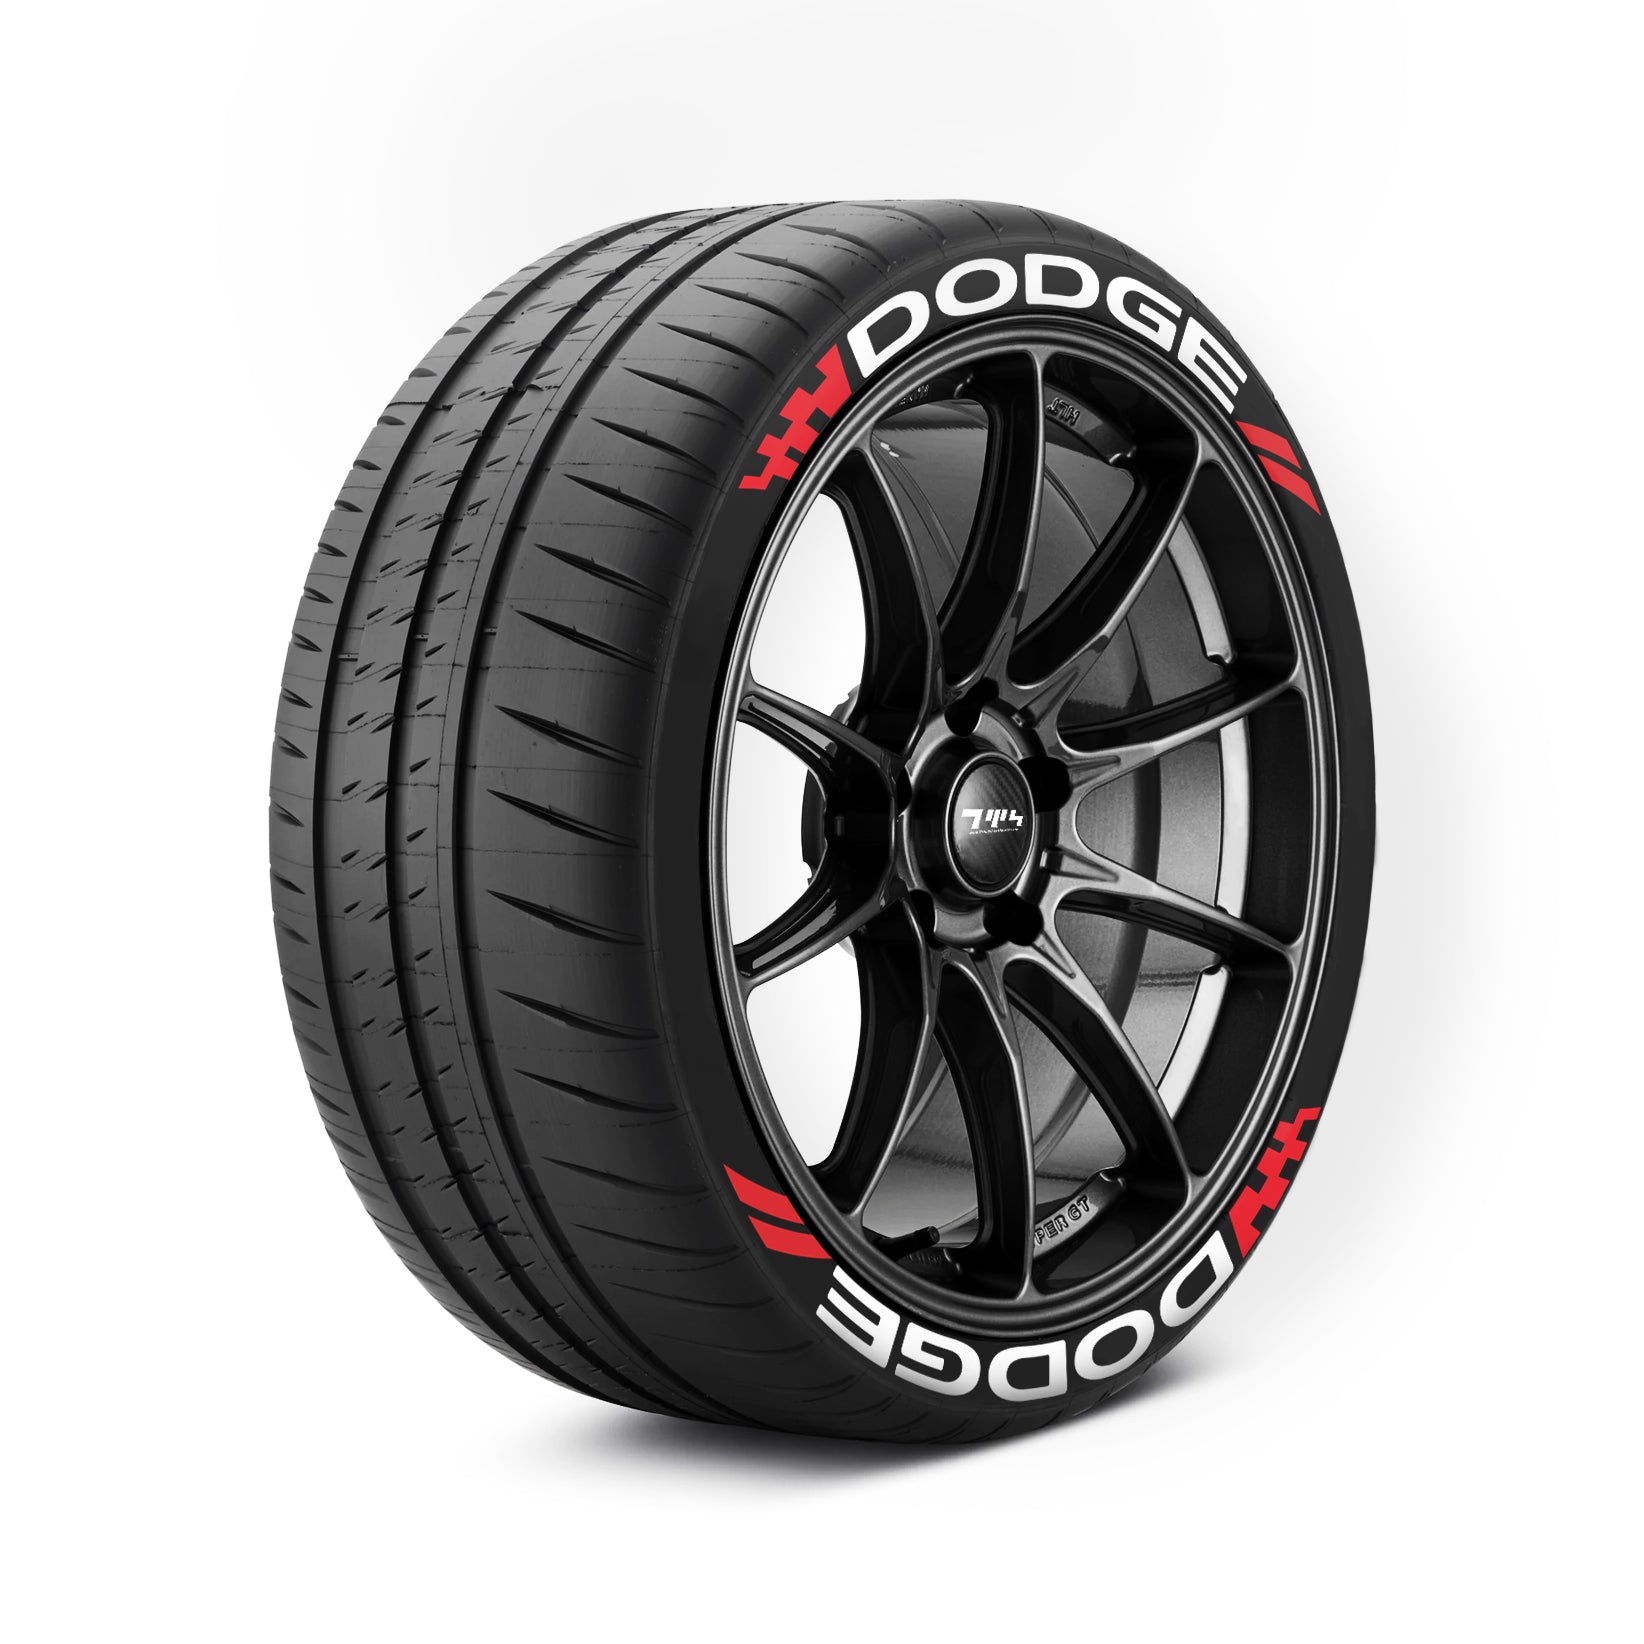 Dodge-Reifenaufkleber